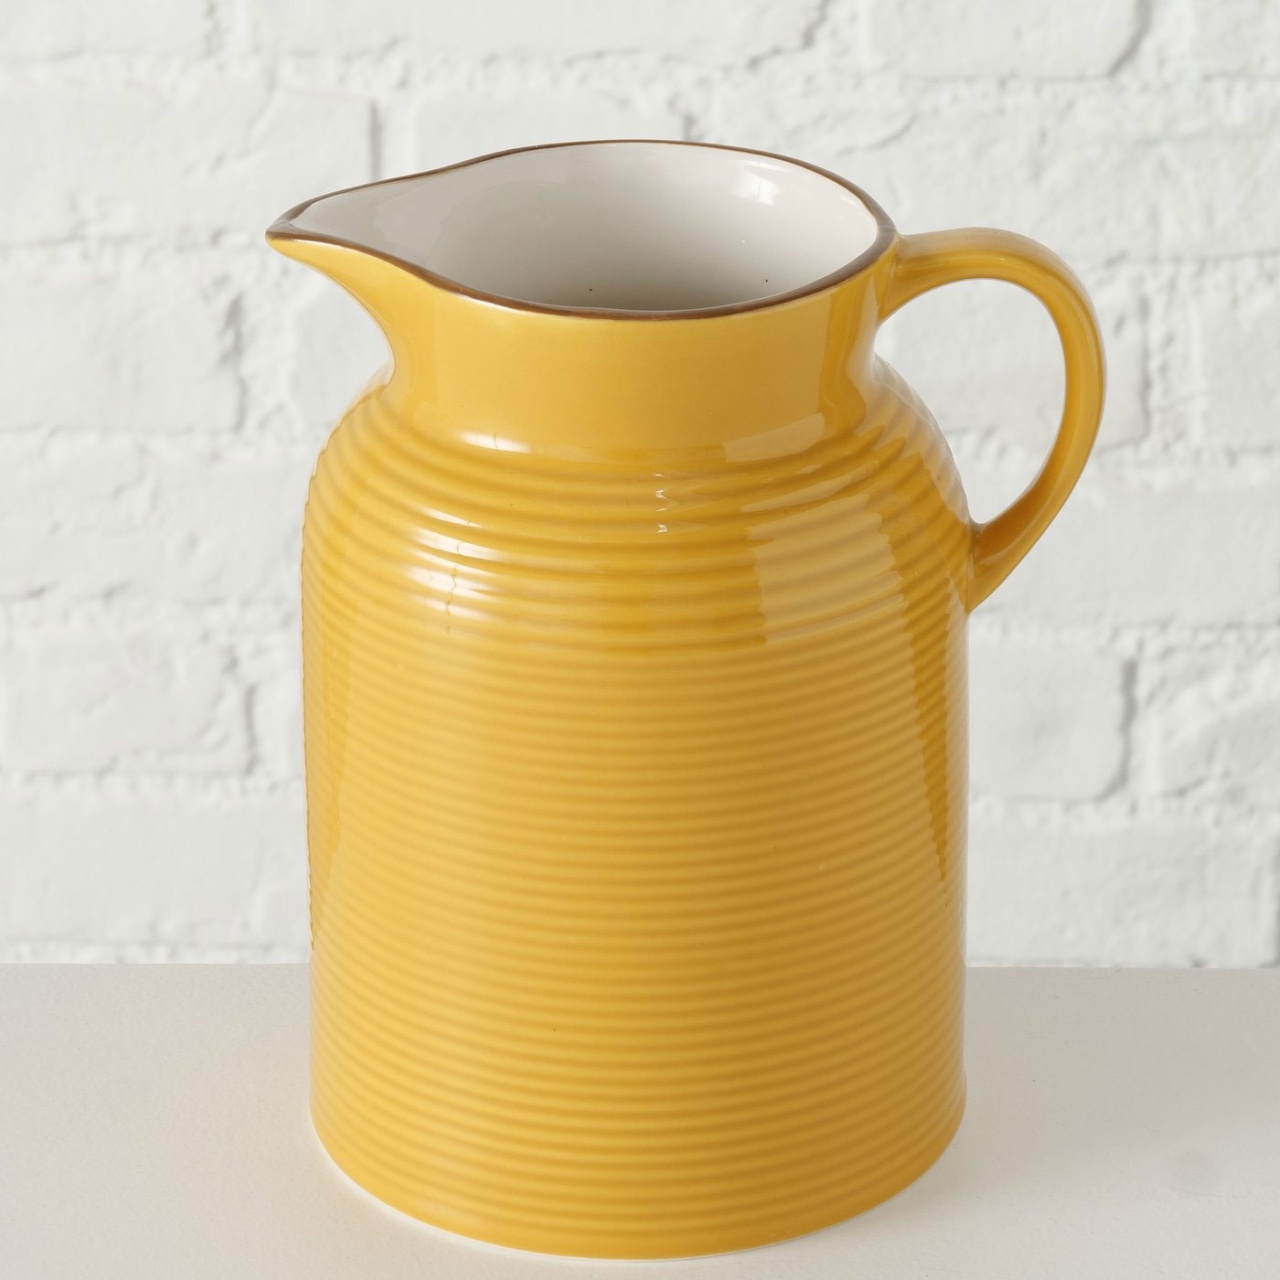 Krug Vase mediterran rustikal gelb Keramik 2000 ml H 21cm